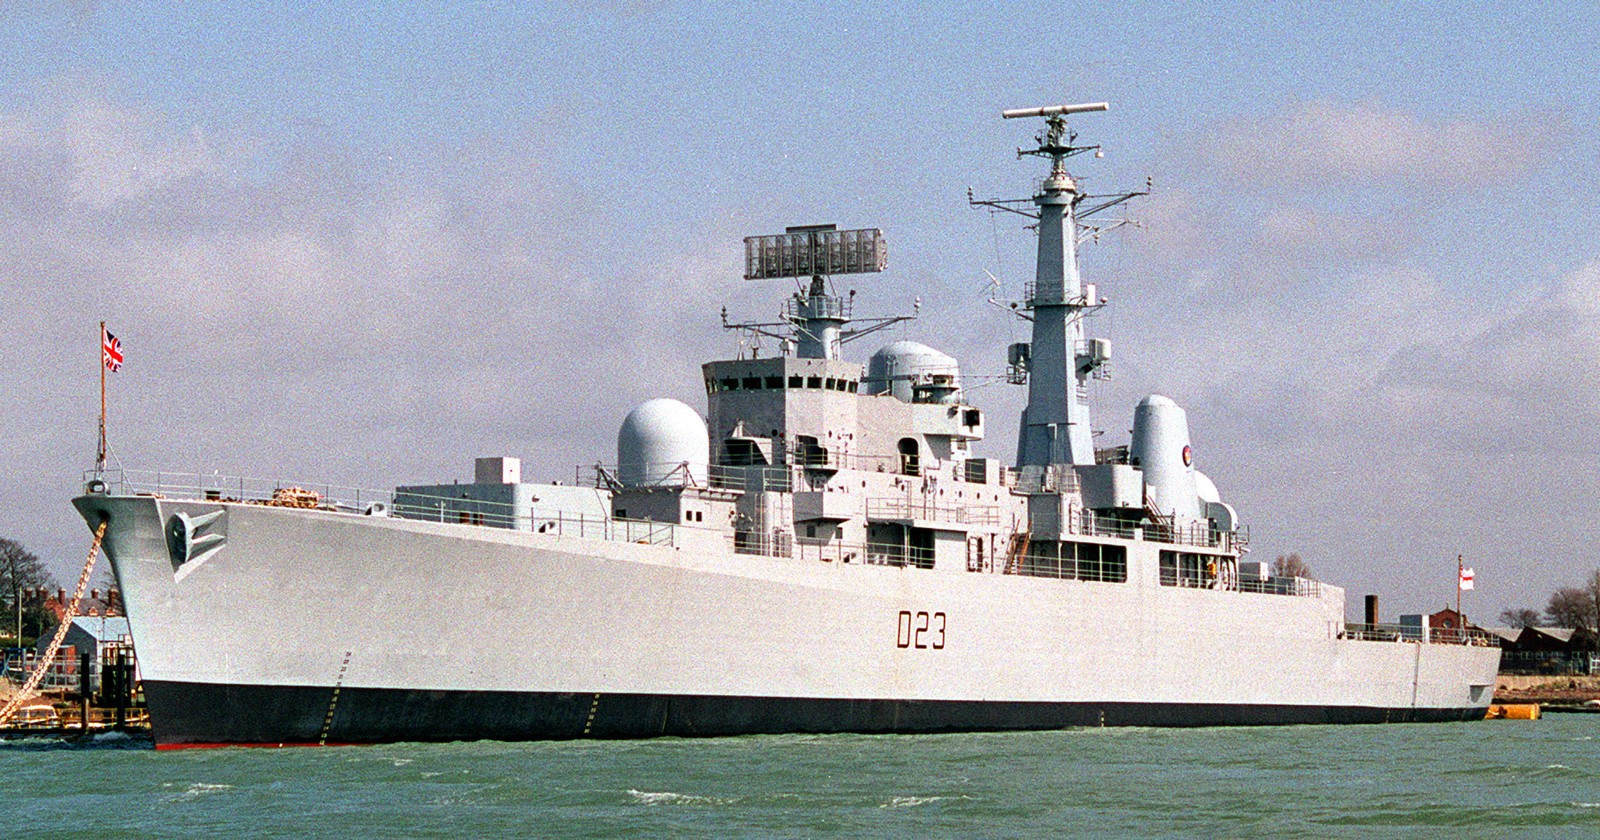 d 23 hms bristol destroyer royal navy